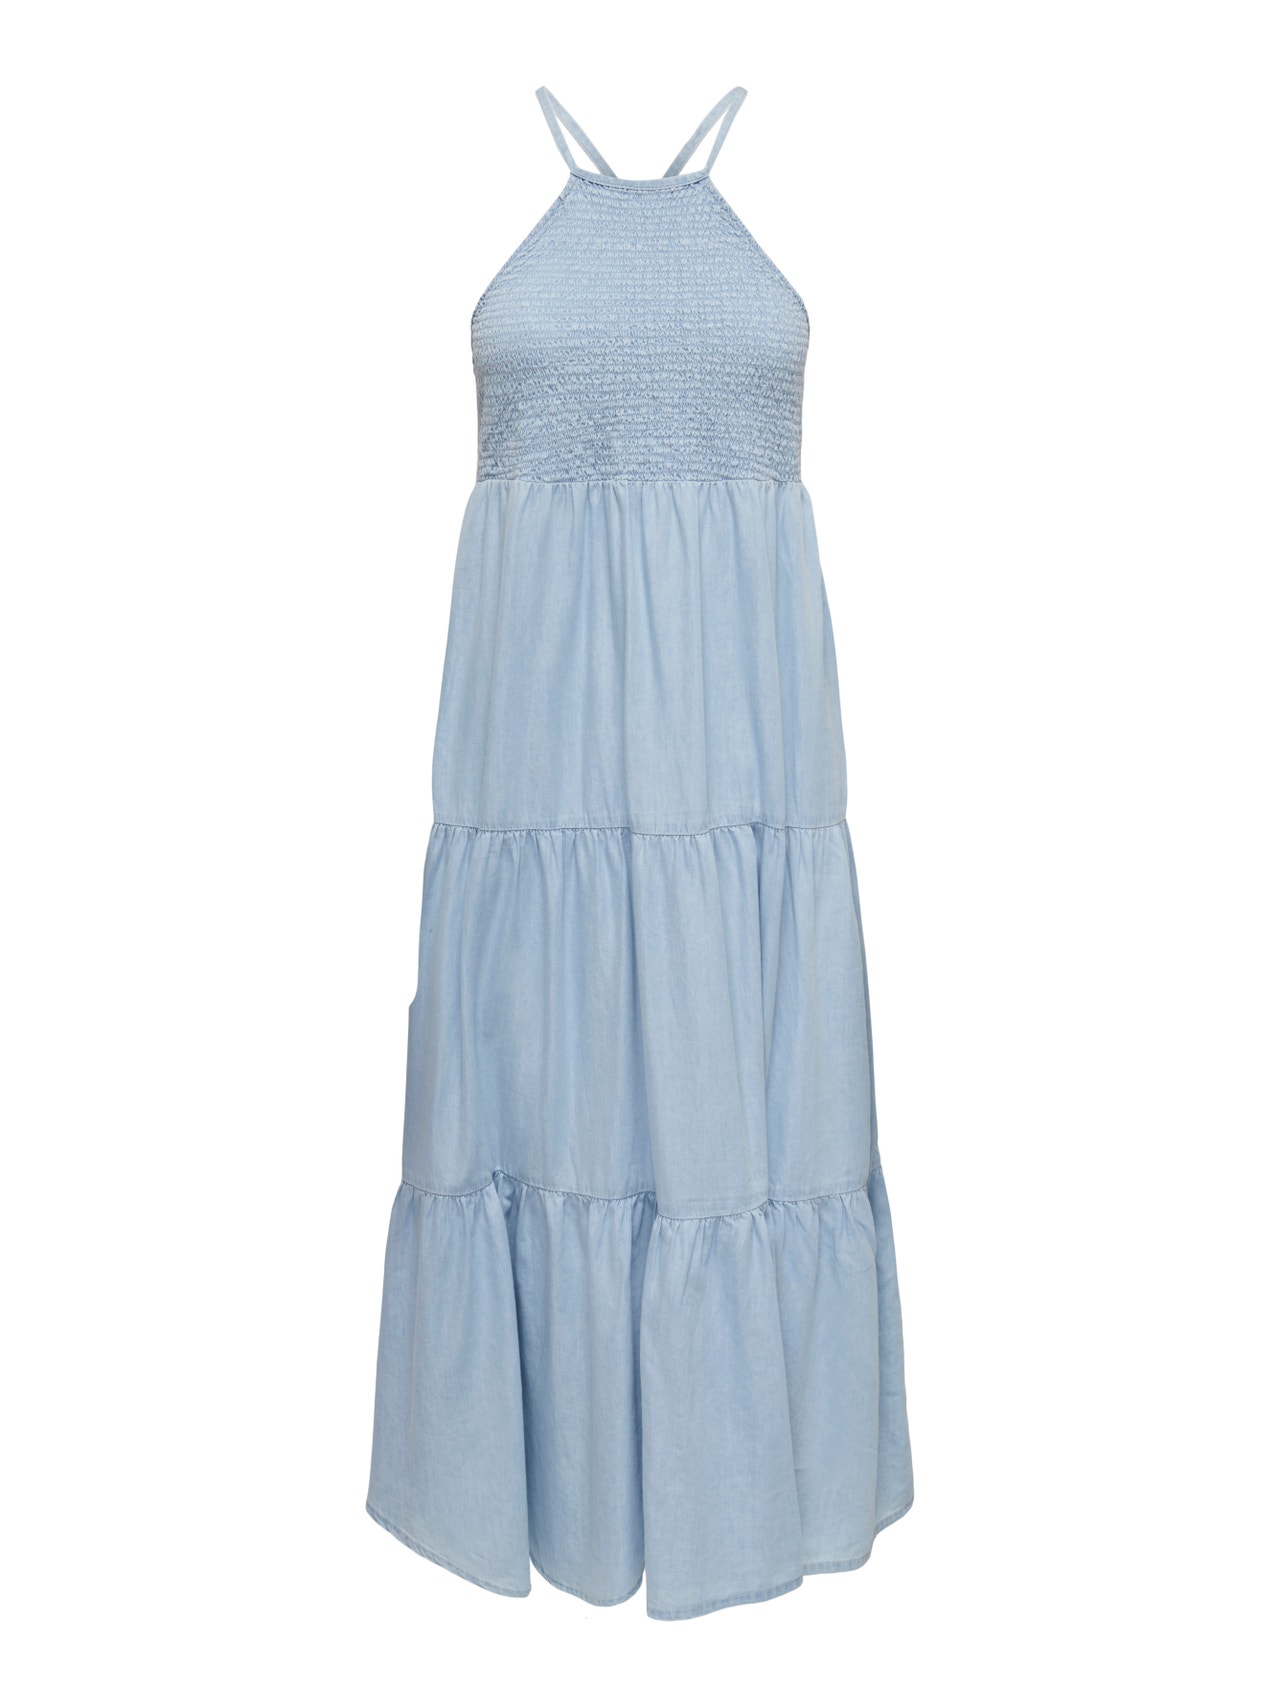 ONLY Relaxed Fit Round Neck Short dress -Light Blue Denim - 15254685